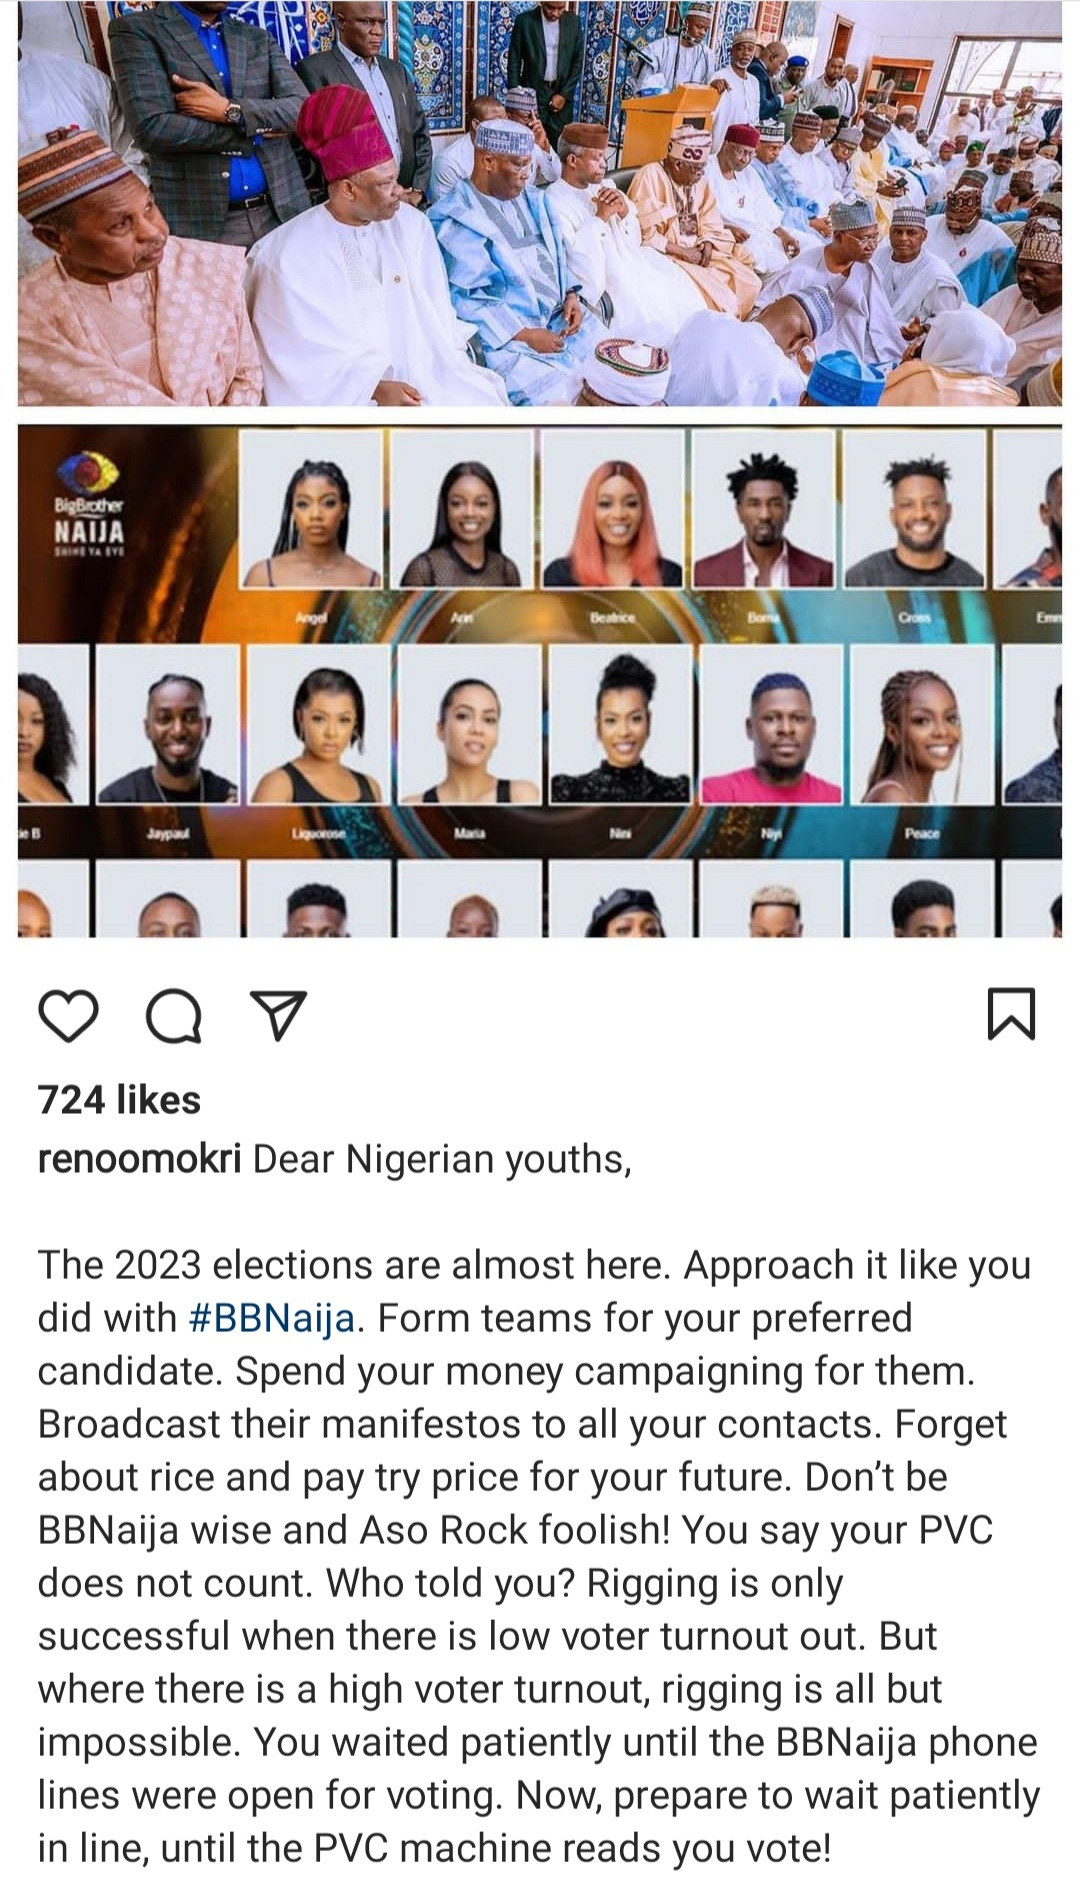 Approach Nigerian elections like you did with BBNaija - Reno Omokri tells Nigerian youths